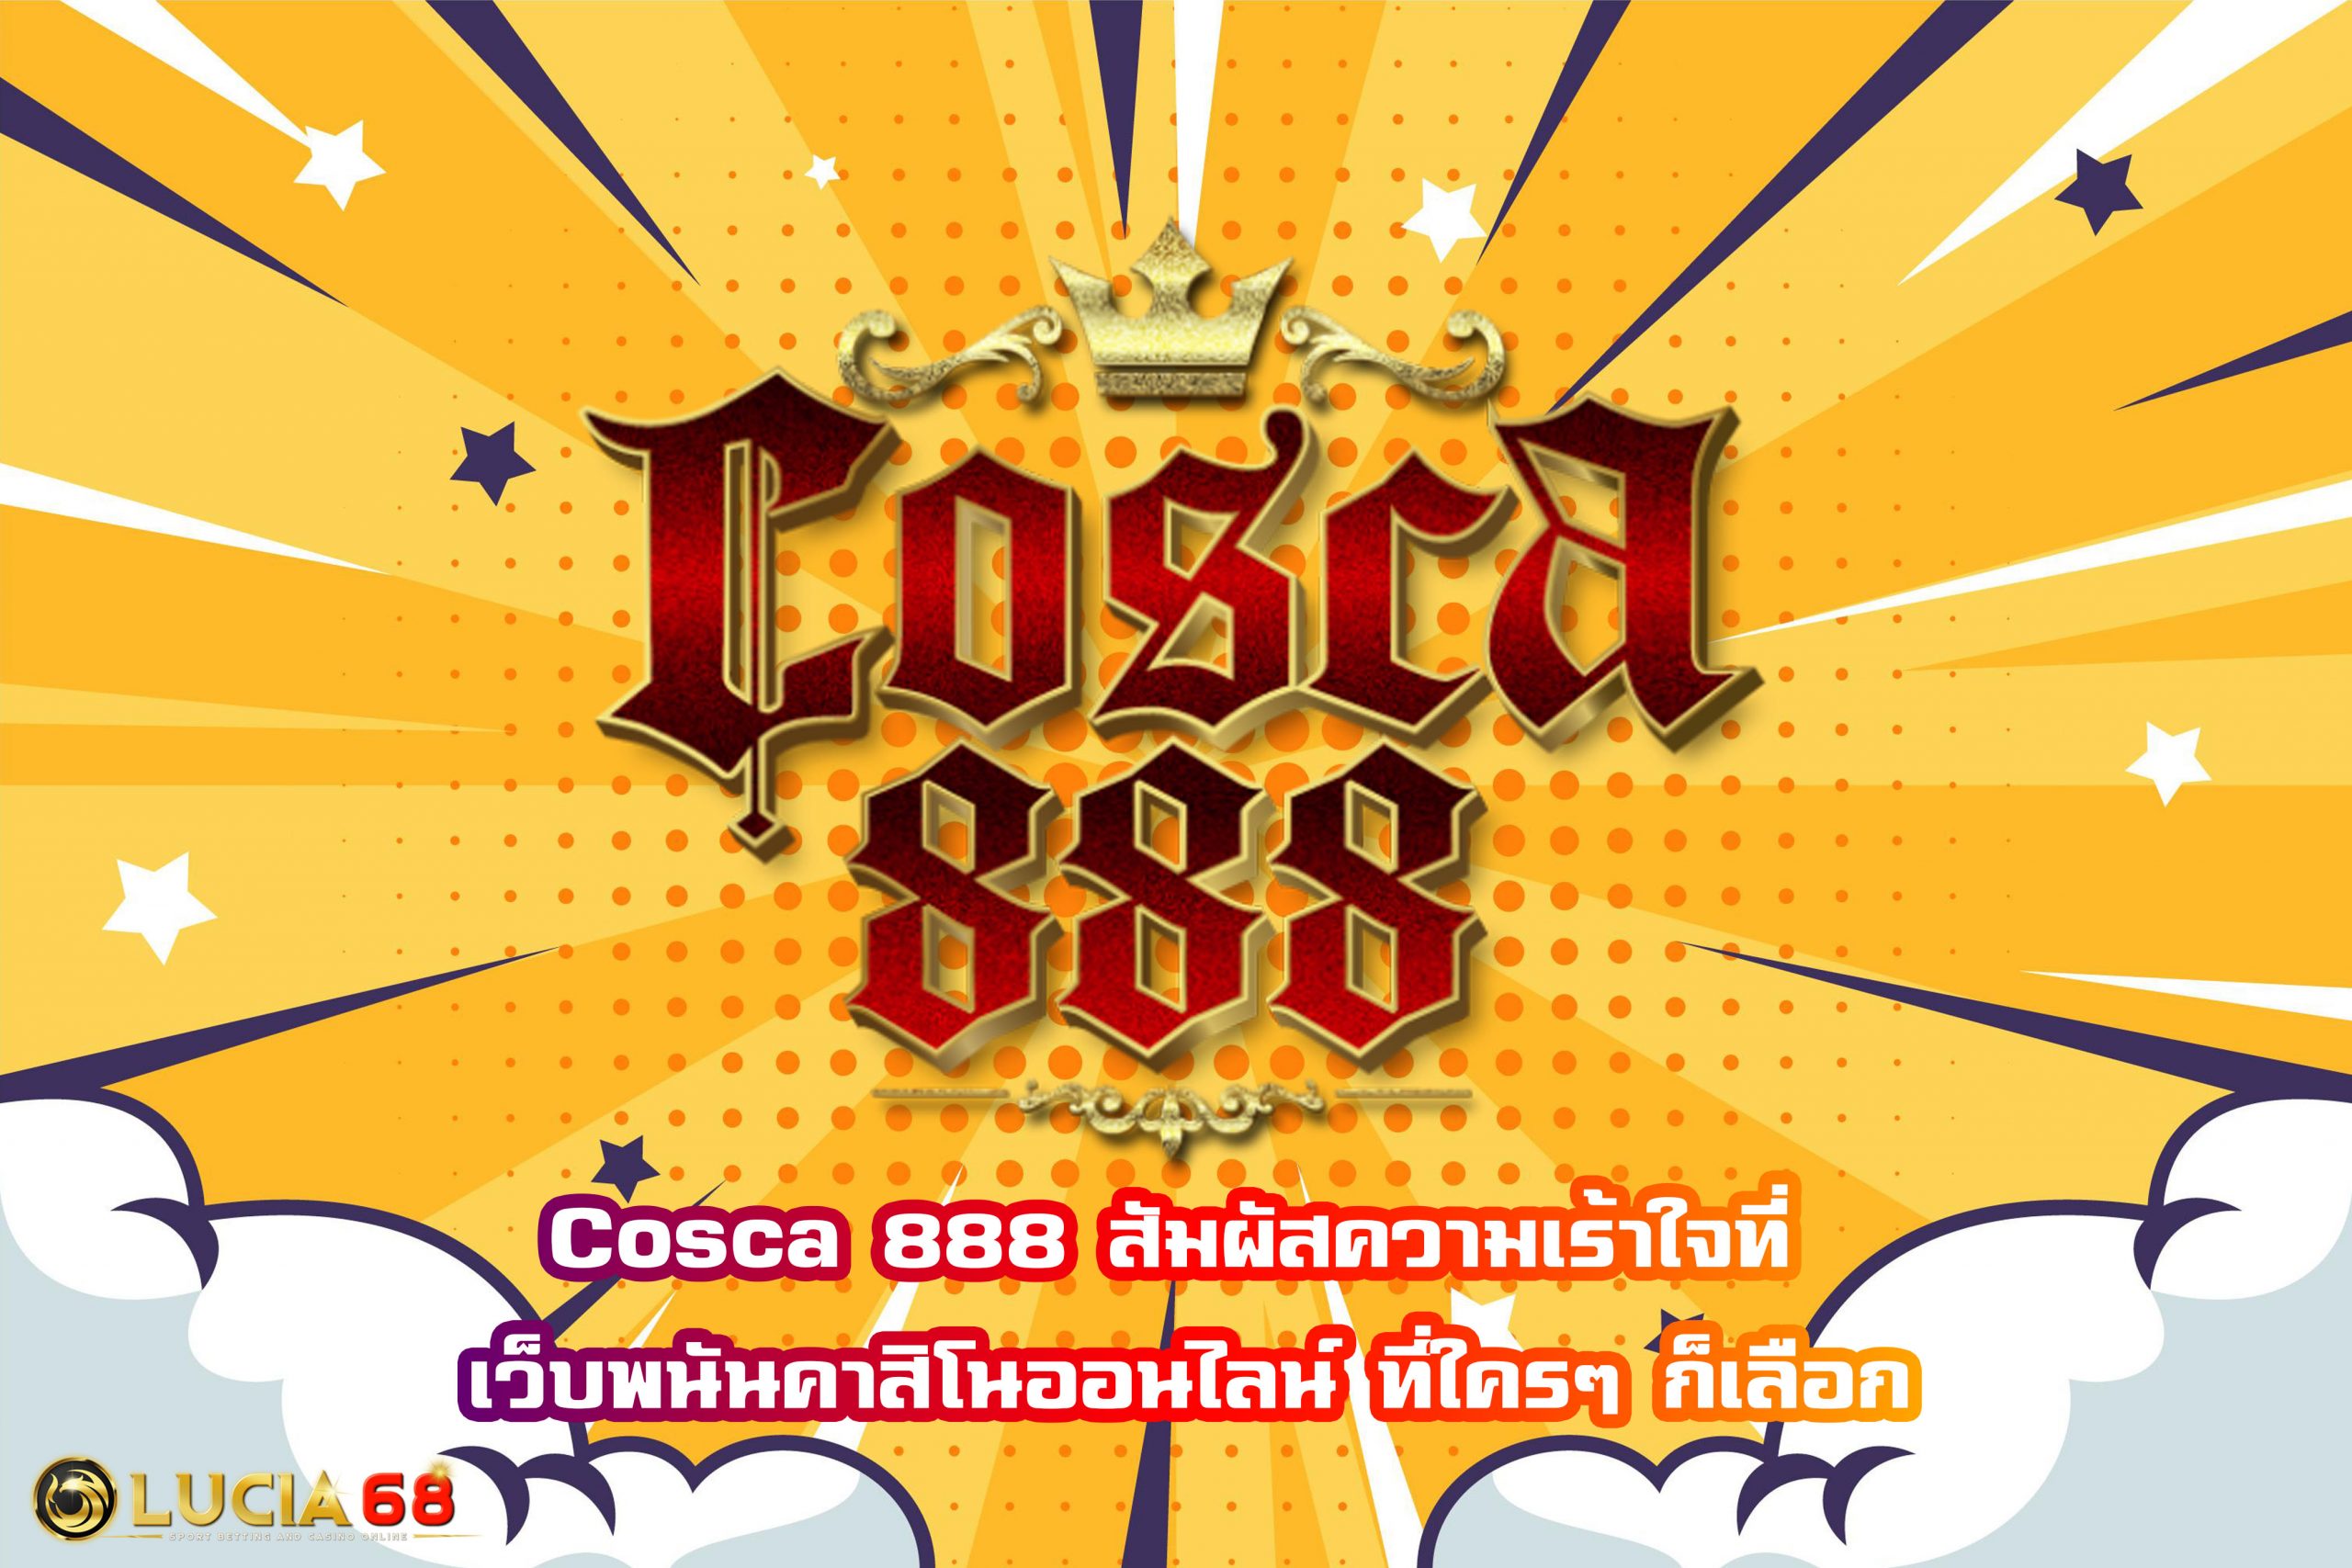 Cosca 888 สัมผัสความเร้าใจที่ เว็บพนันคาสิโนออนไลน์ ที่ใครๆ ก็เลือก